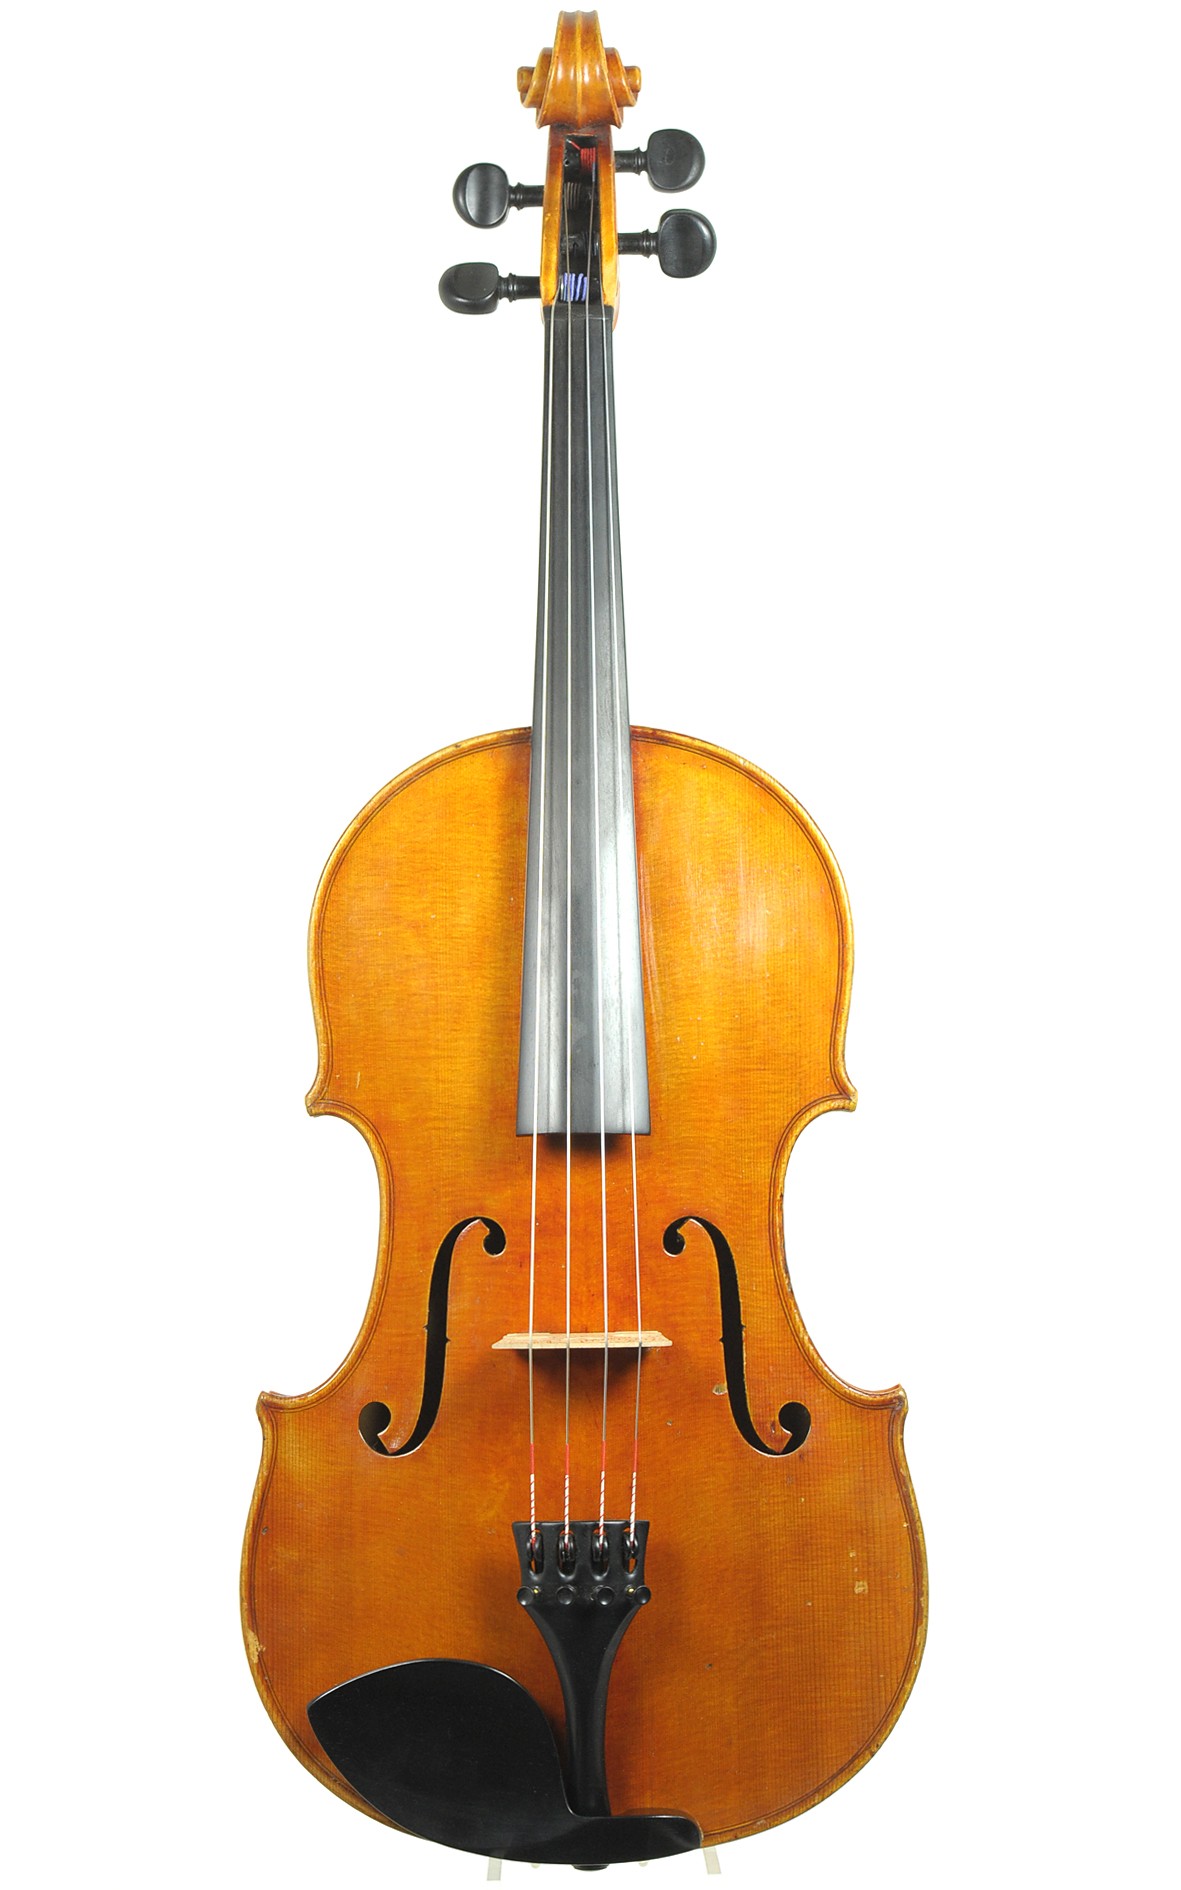 Tertis viola, German viola by Alois Schöttl, Ludwigshafen 1938